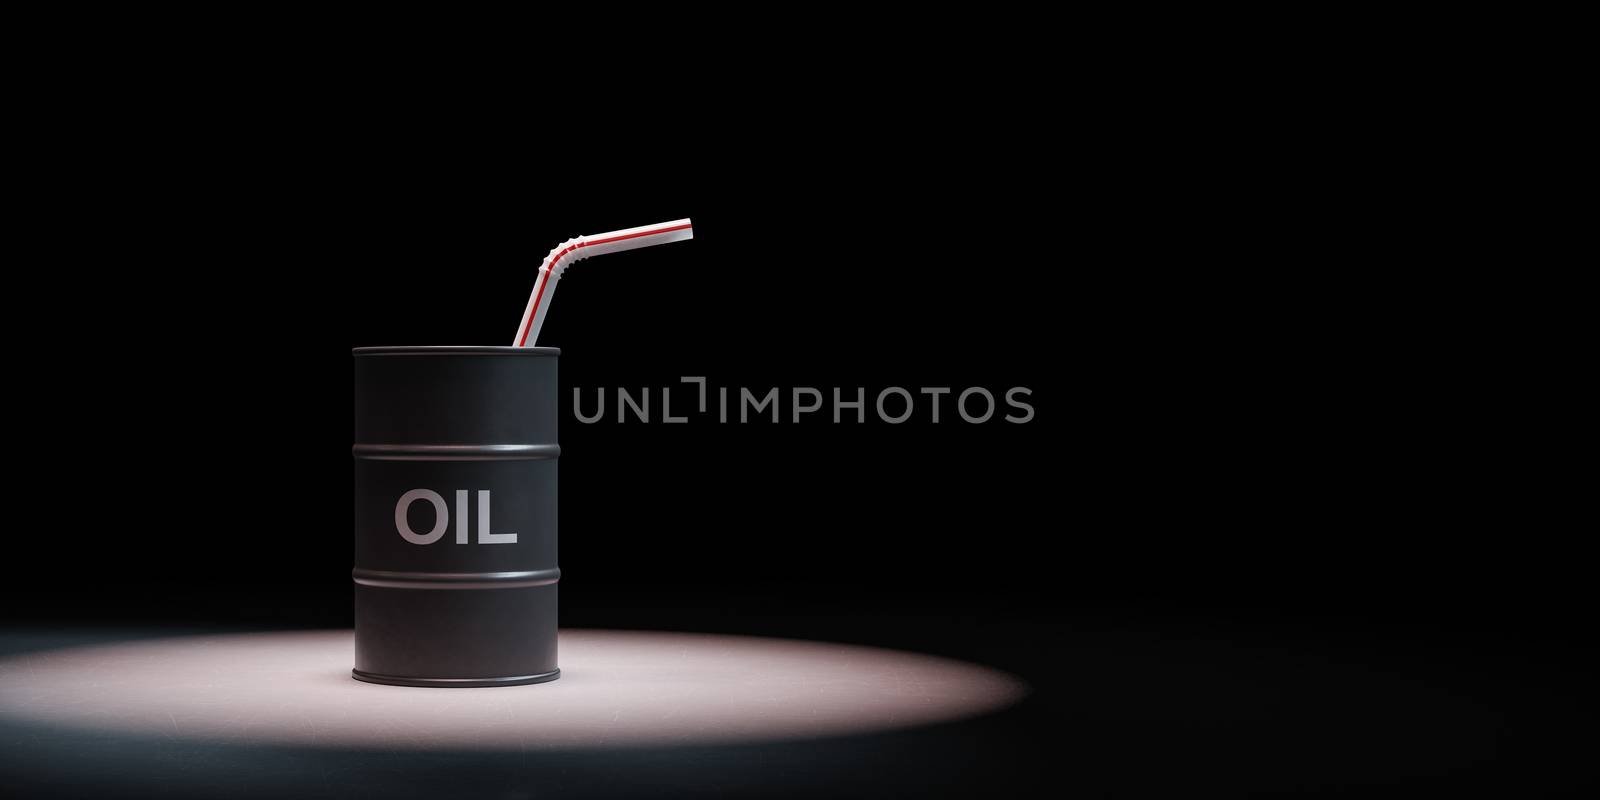 Oil Drink Spotlighted on Black Background by make